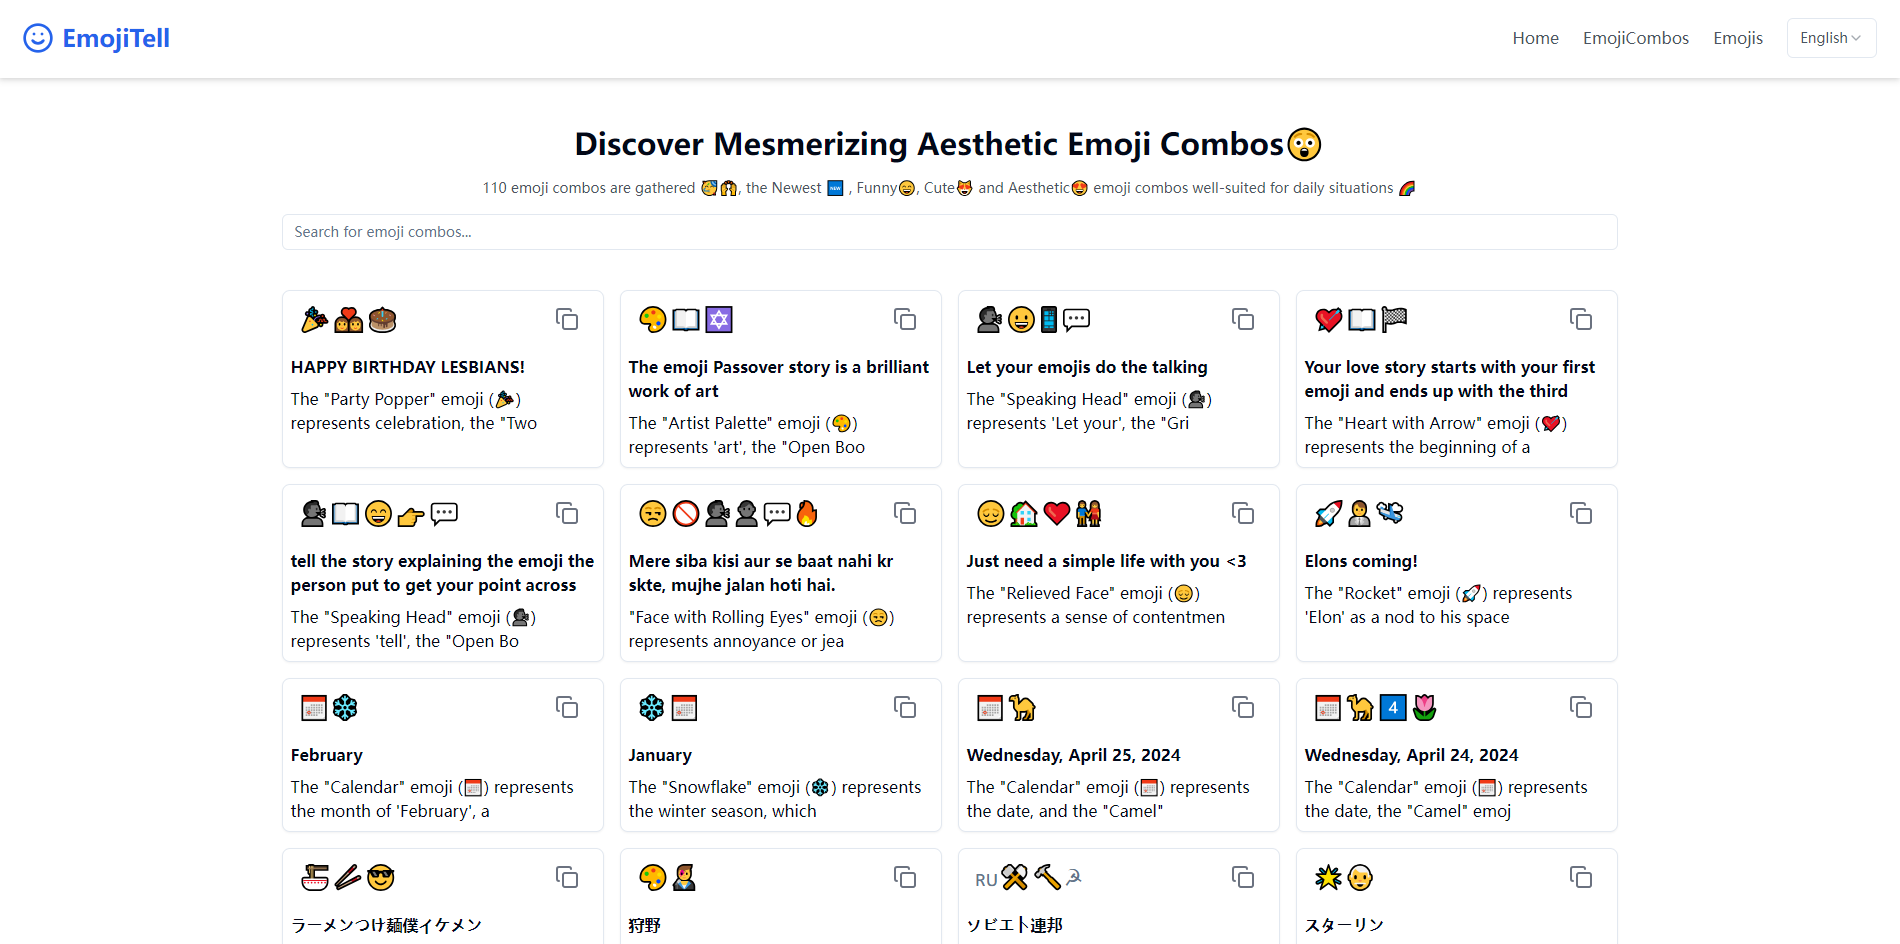 startuptile emojitell-Translate text into fun and expressive emoji combos